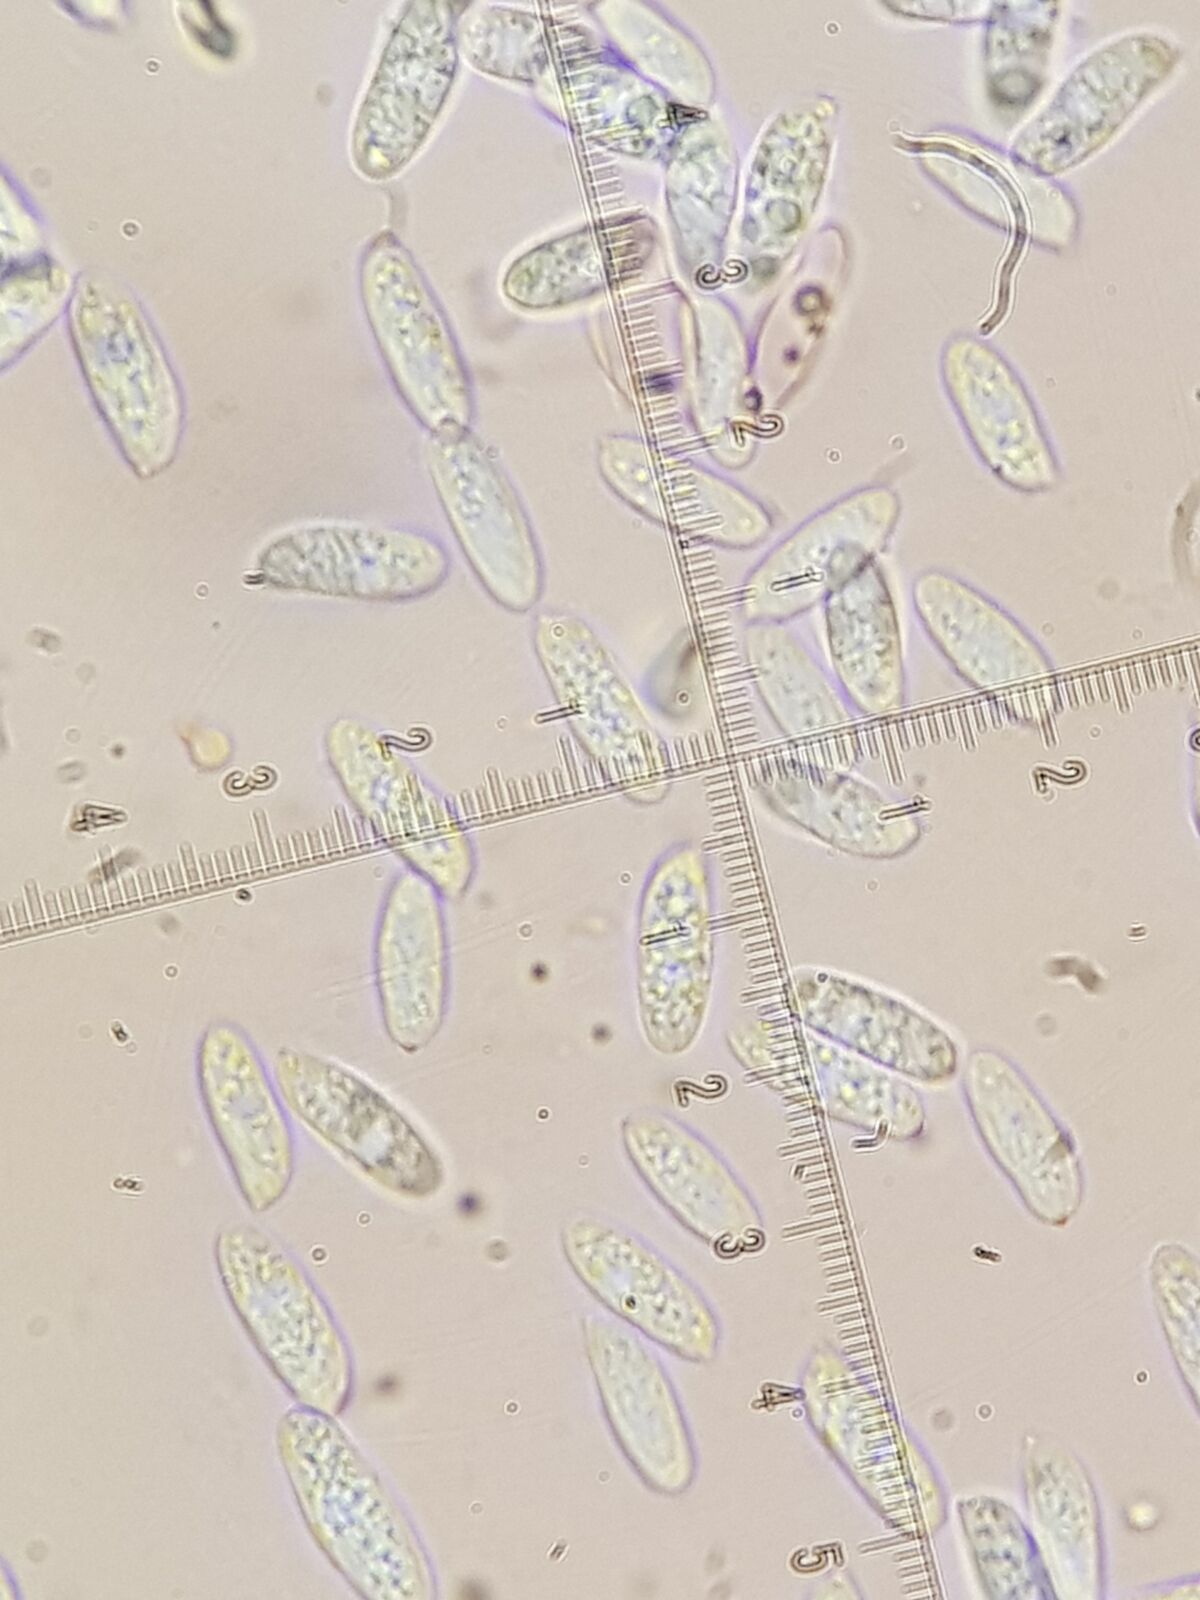 Spores au microscope X 1000- du Polypore moucheté (Polyporus forquignonii)  - Photo Gilles Weiskircher (Anab)